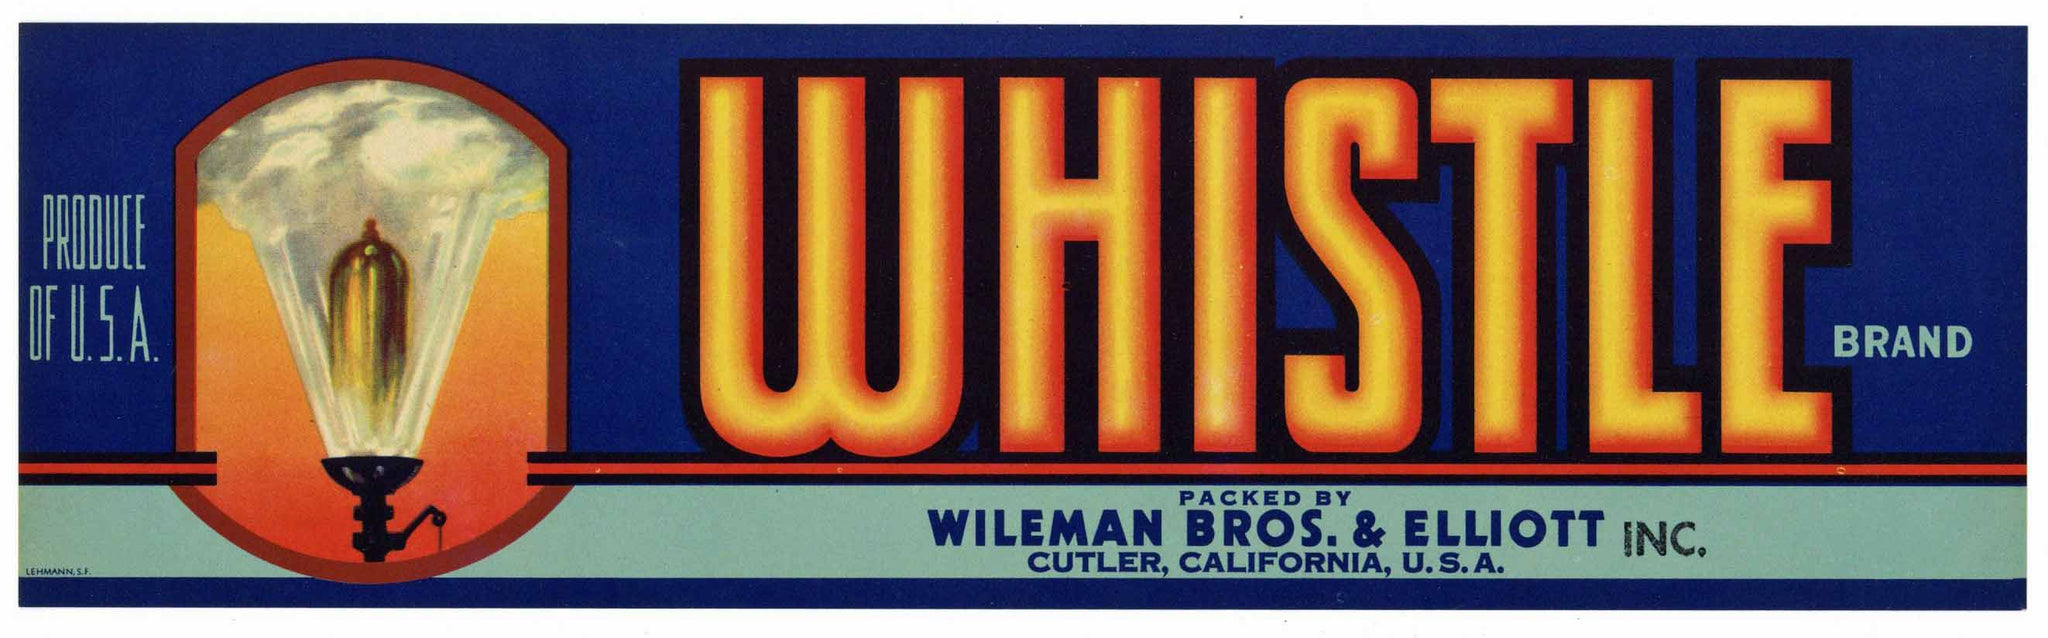 Whistle Brand Vintage Cutler Fruit Crate Label, Railroad